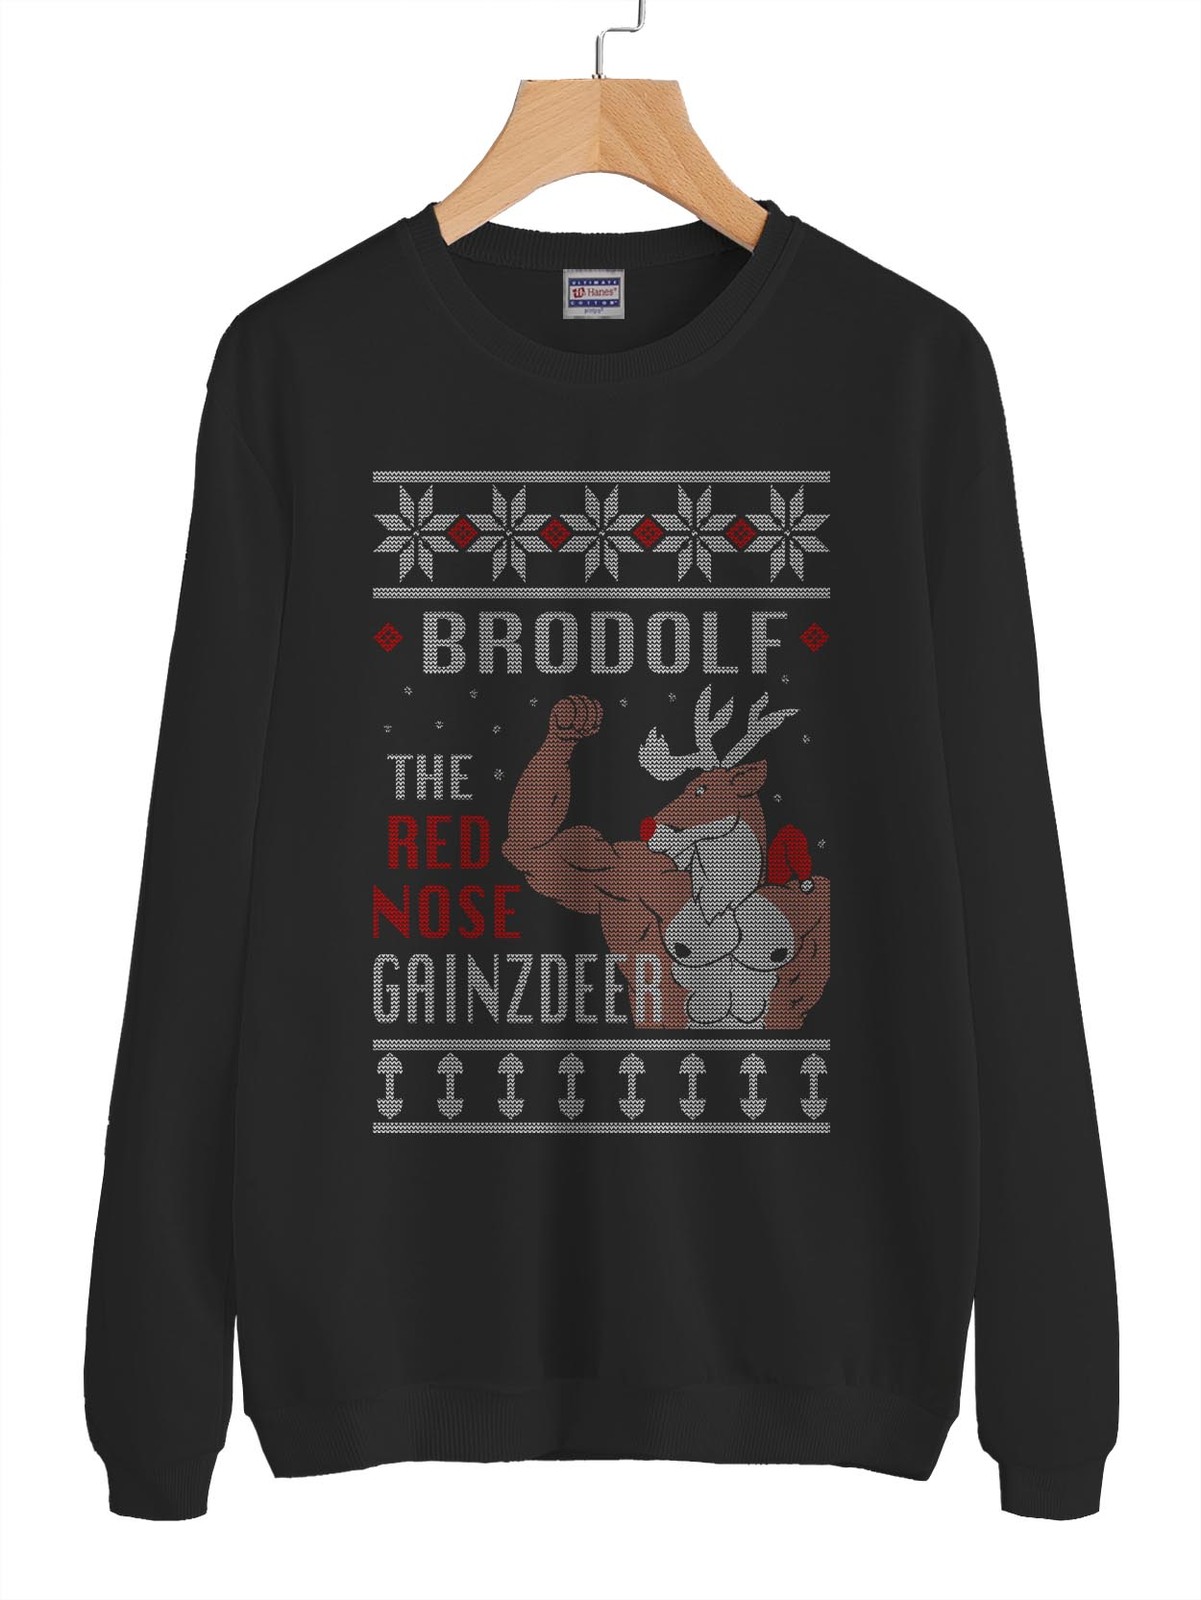 Brodolf Christmas sweater Sweatshirt BLACK - $30.00